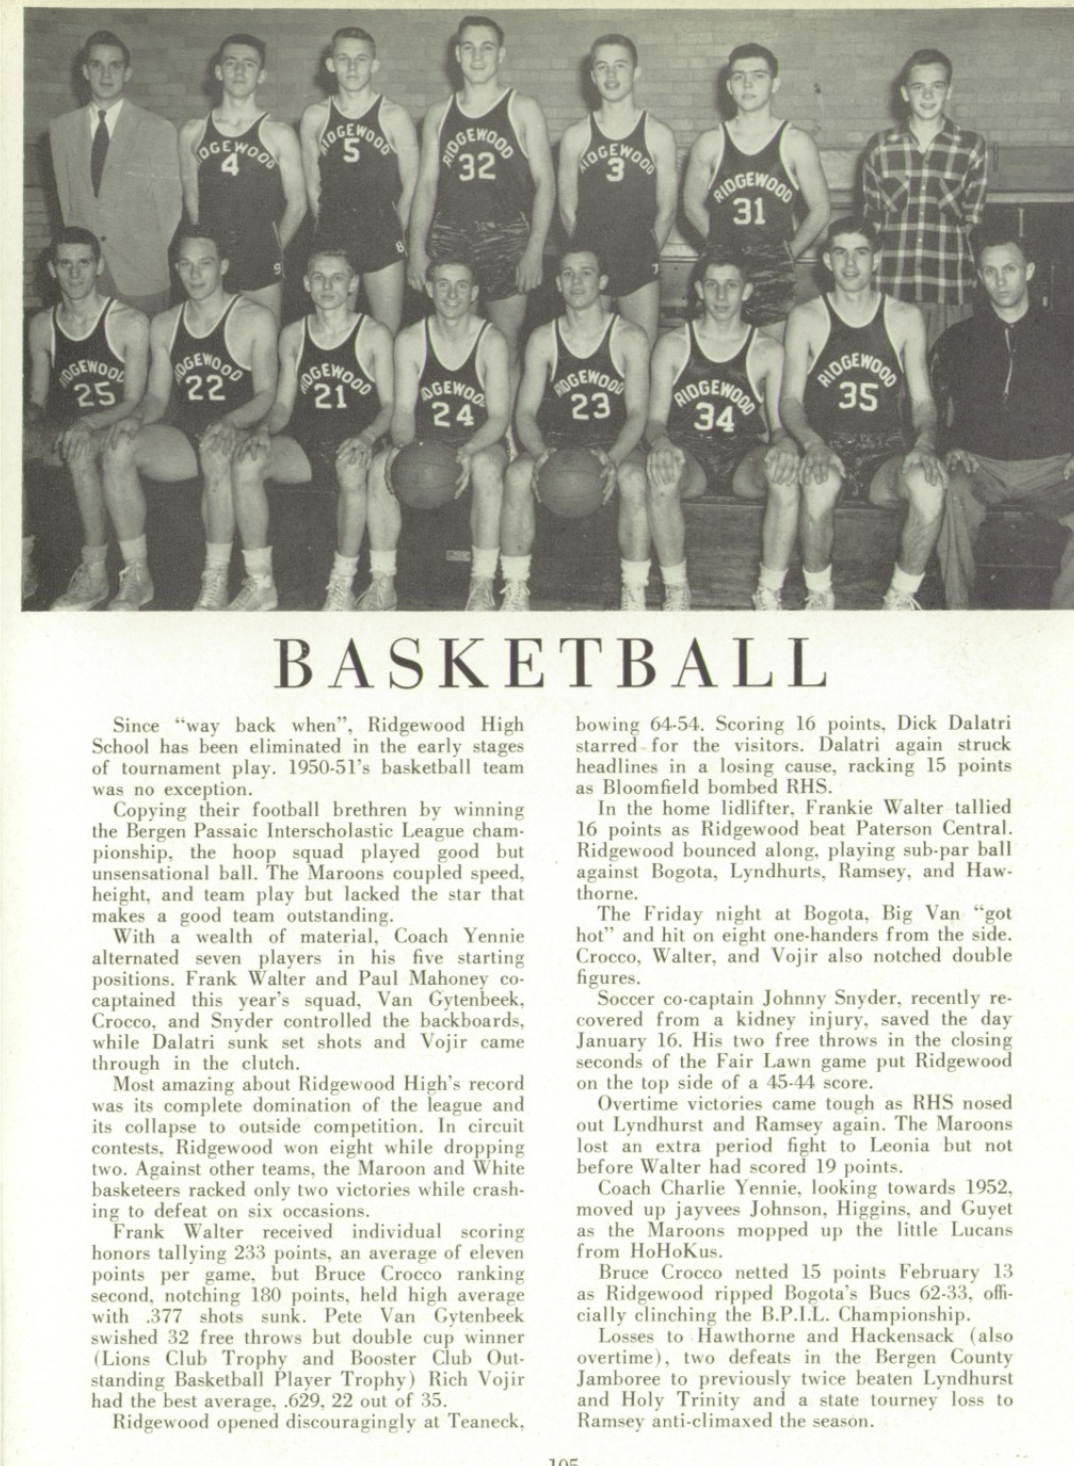 1951 Boys’ Basketball Team